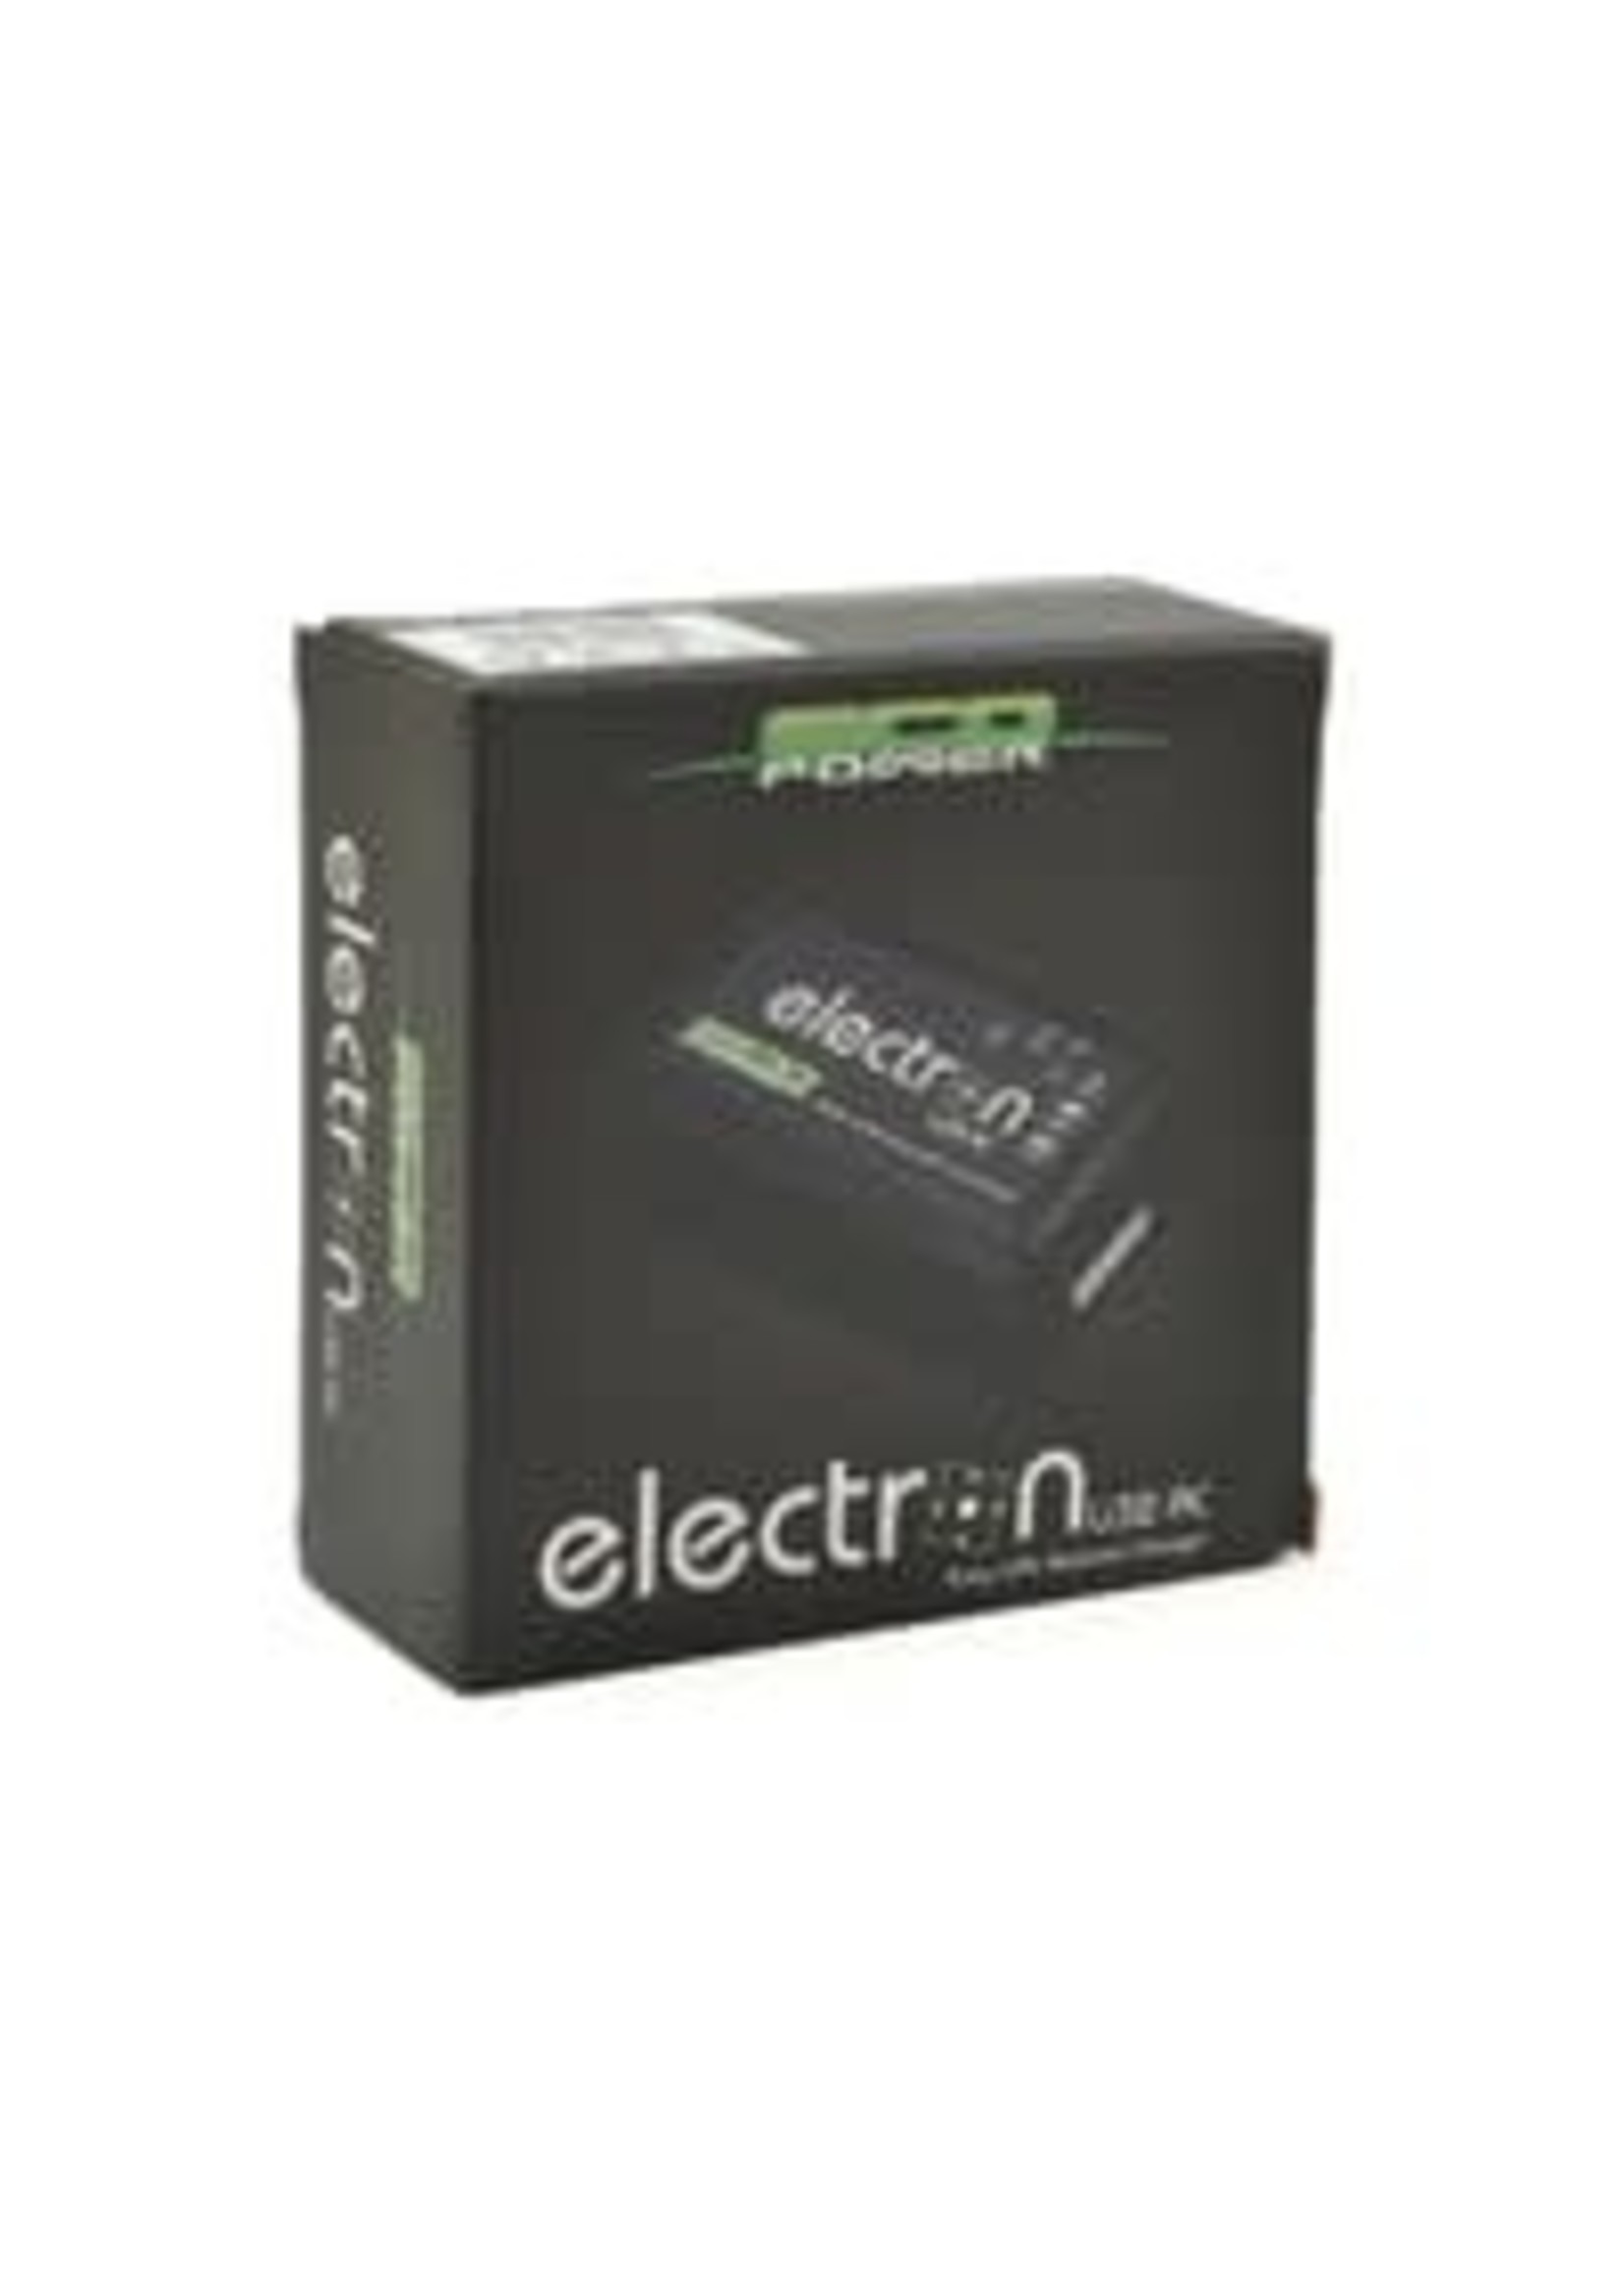 EcoPower EcoPower "Electron Li32 AC" LiPo Balance Battery Charger (2-3S/2A/25W)